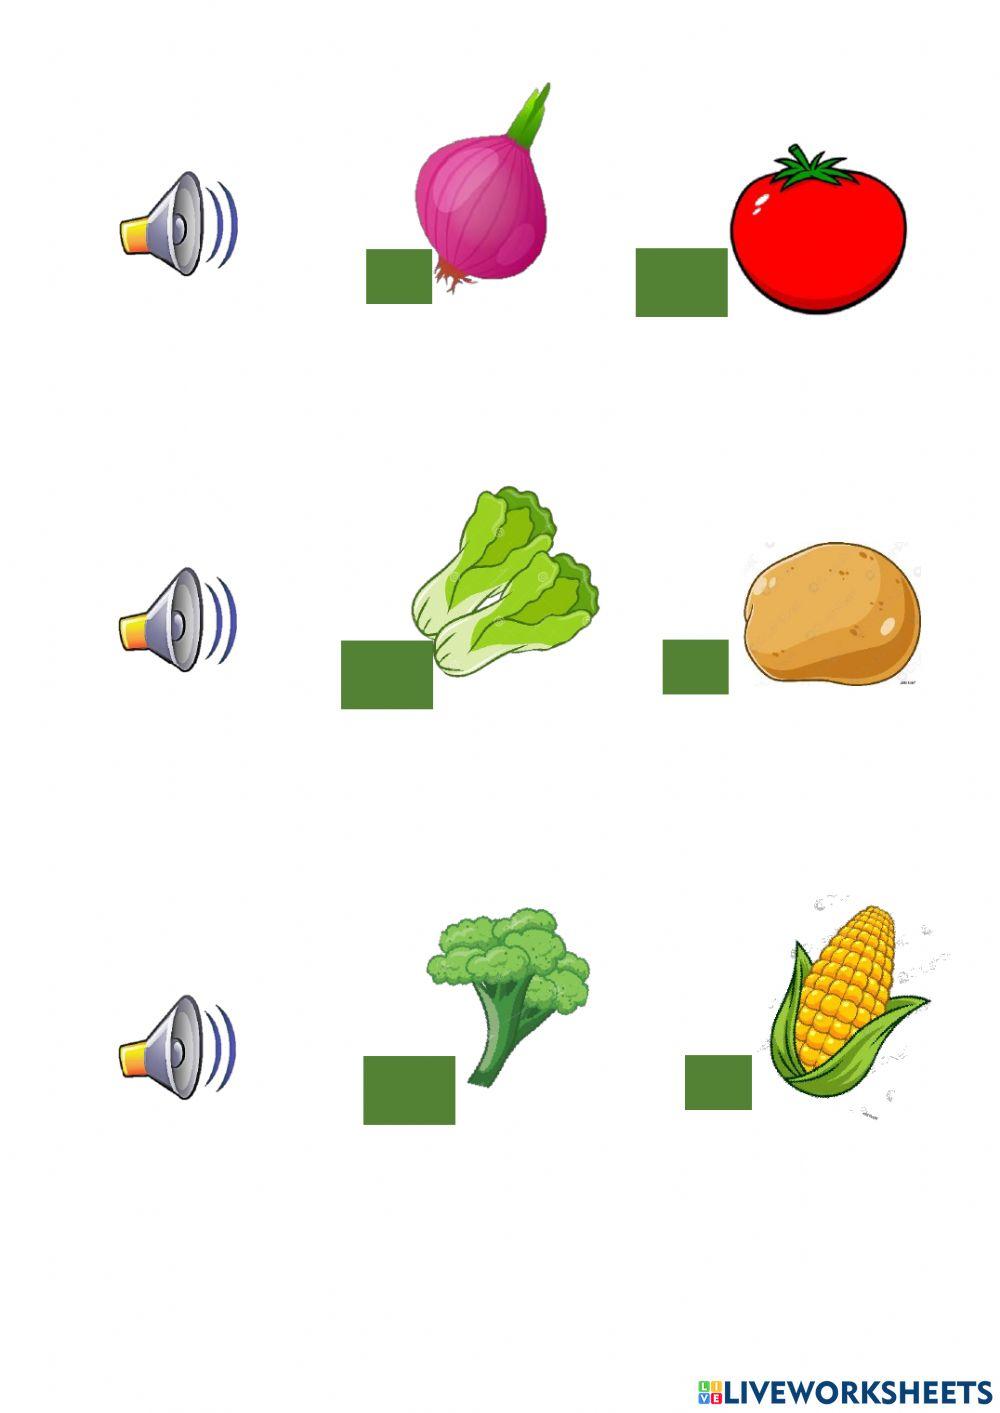 Vegetables- activity